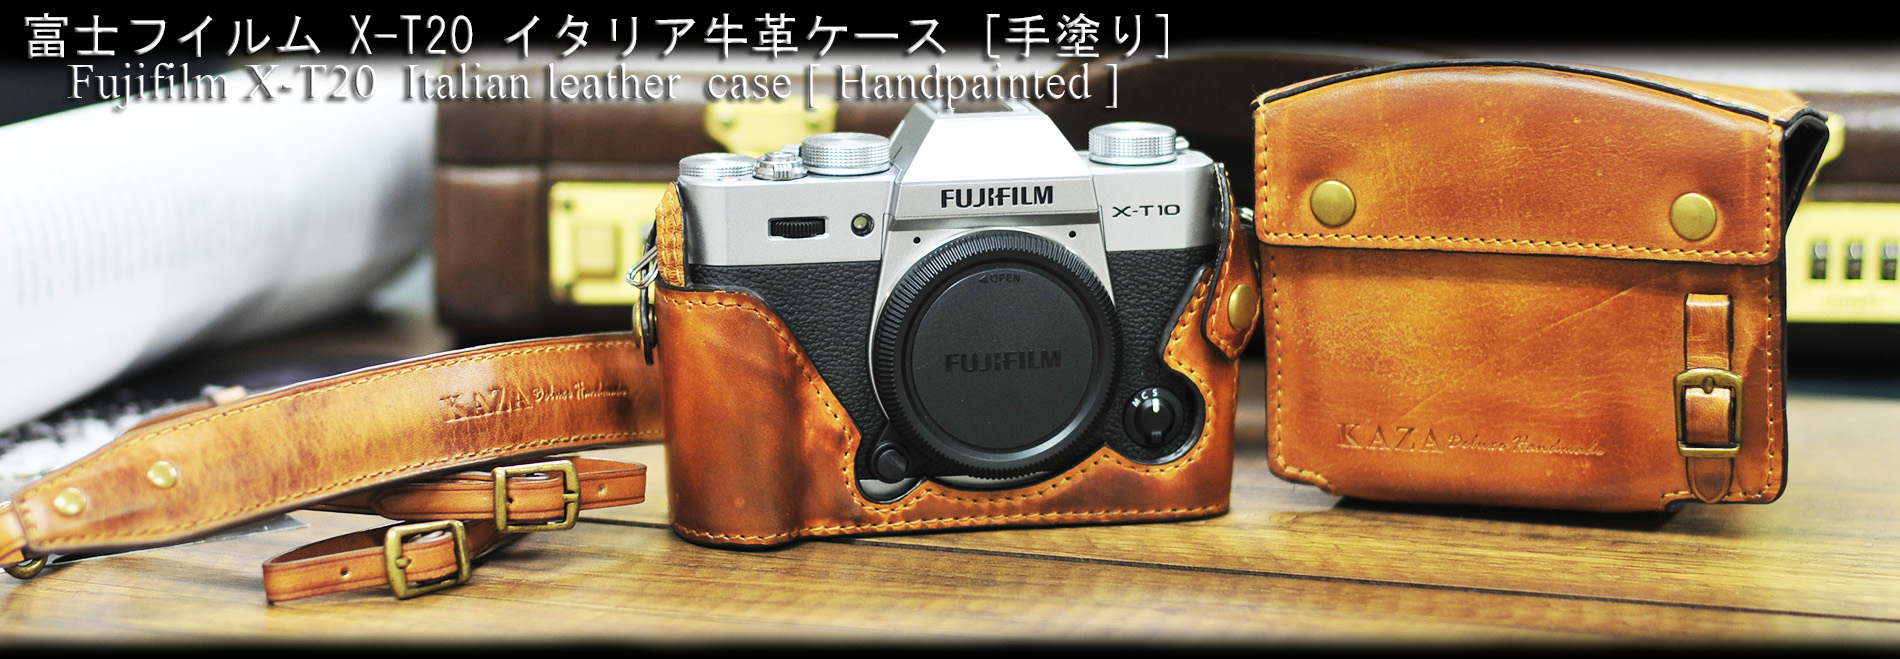 Leather half case 富士XT20 用カメラケース Fujifilm XT20 相機皮套 by KAZA